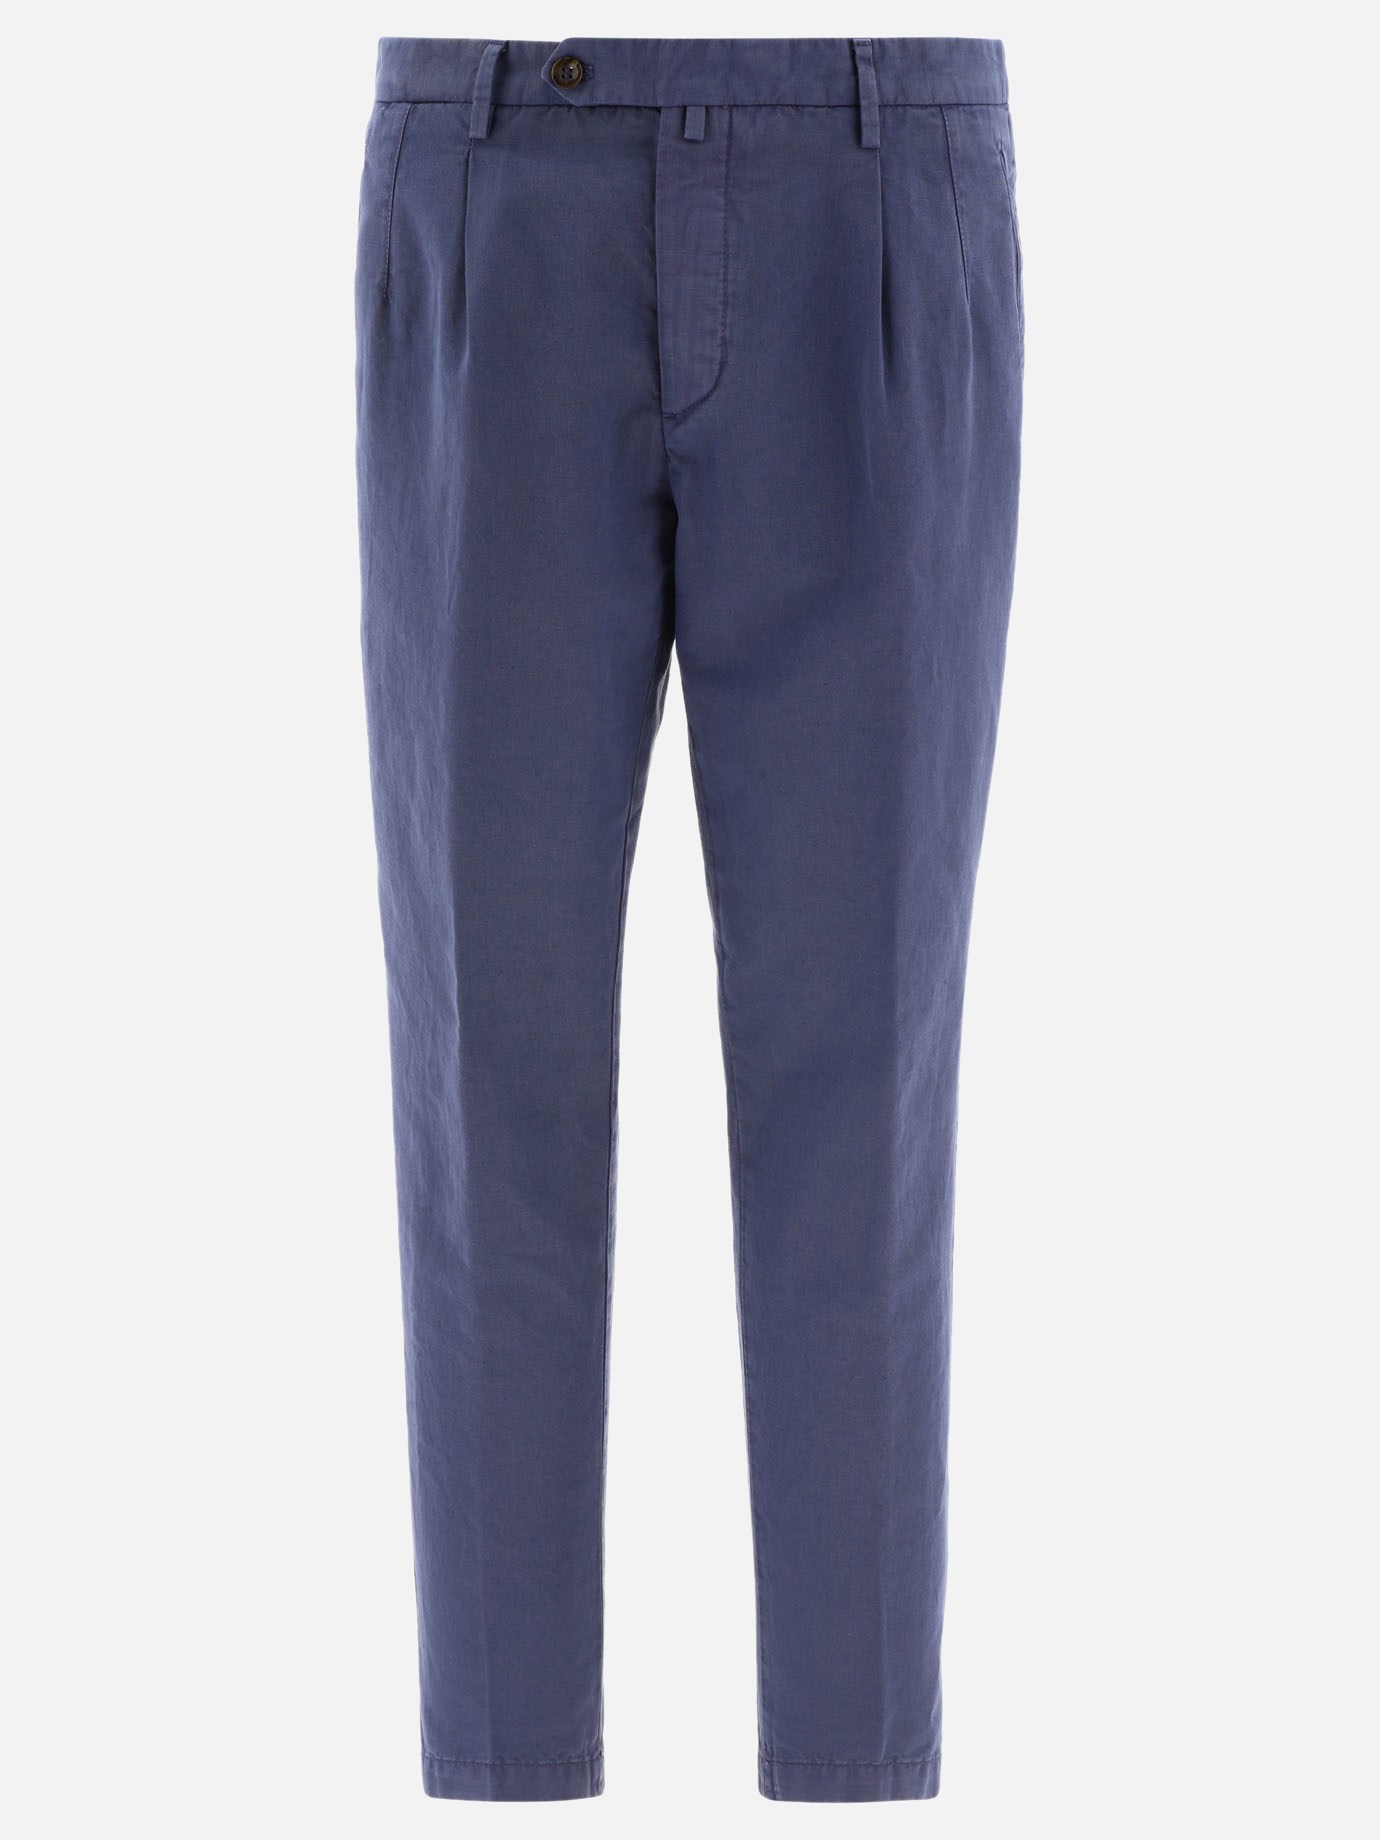 Pantaloni  Cernobbio by Briglia 1949 - 1